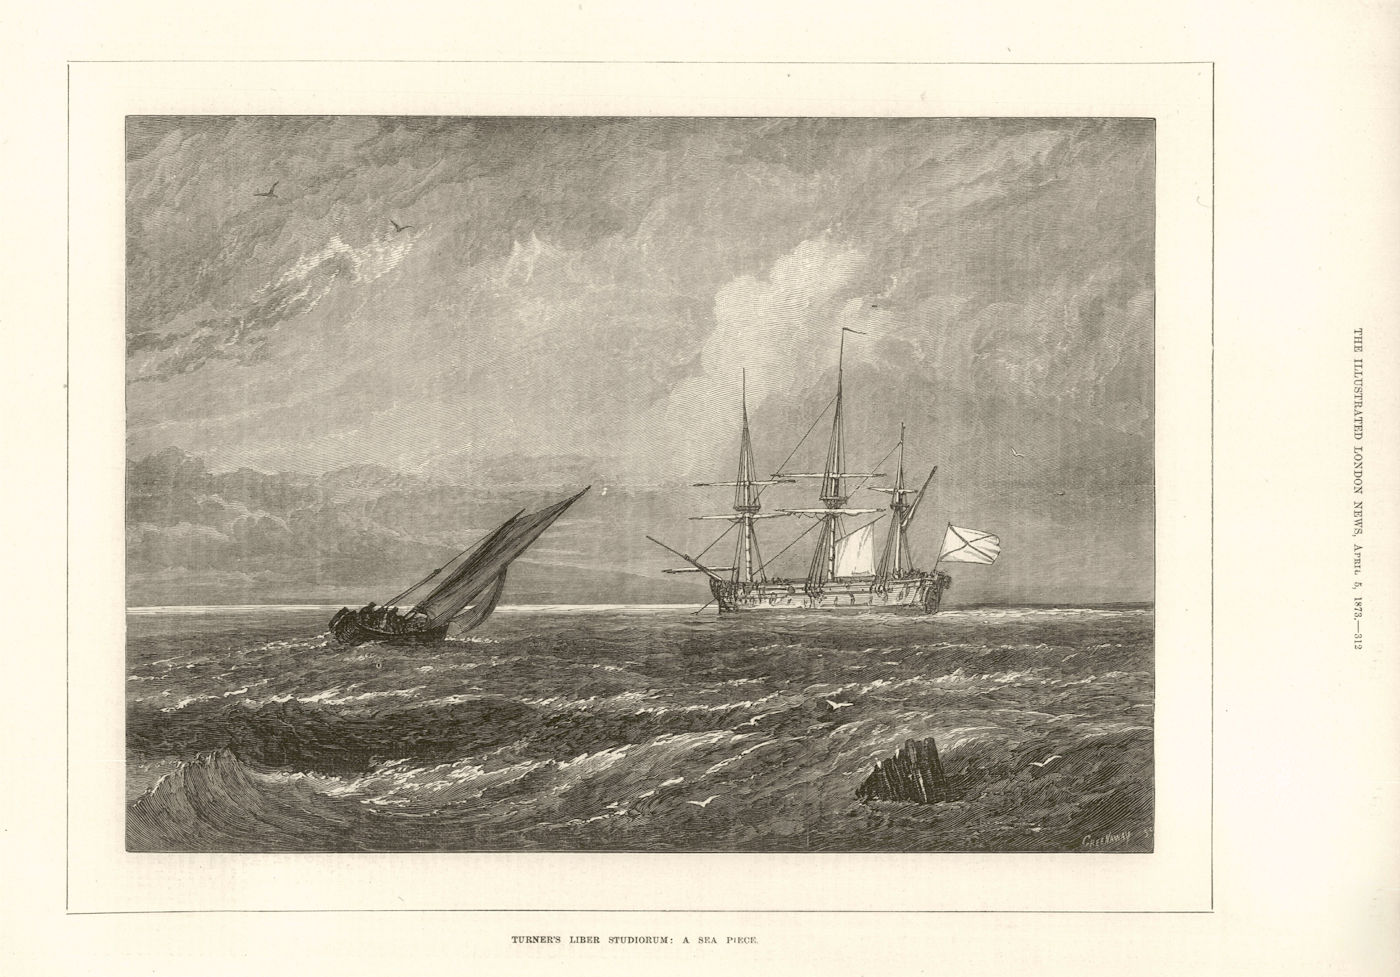 Associate Product Turner's Liber Studiorum: A sea piece. Man of War. Royal Navy 1873 old print